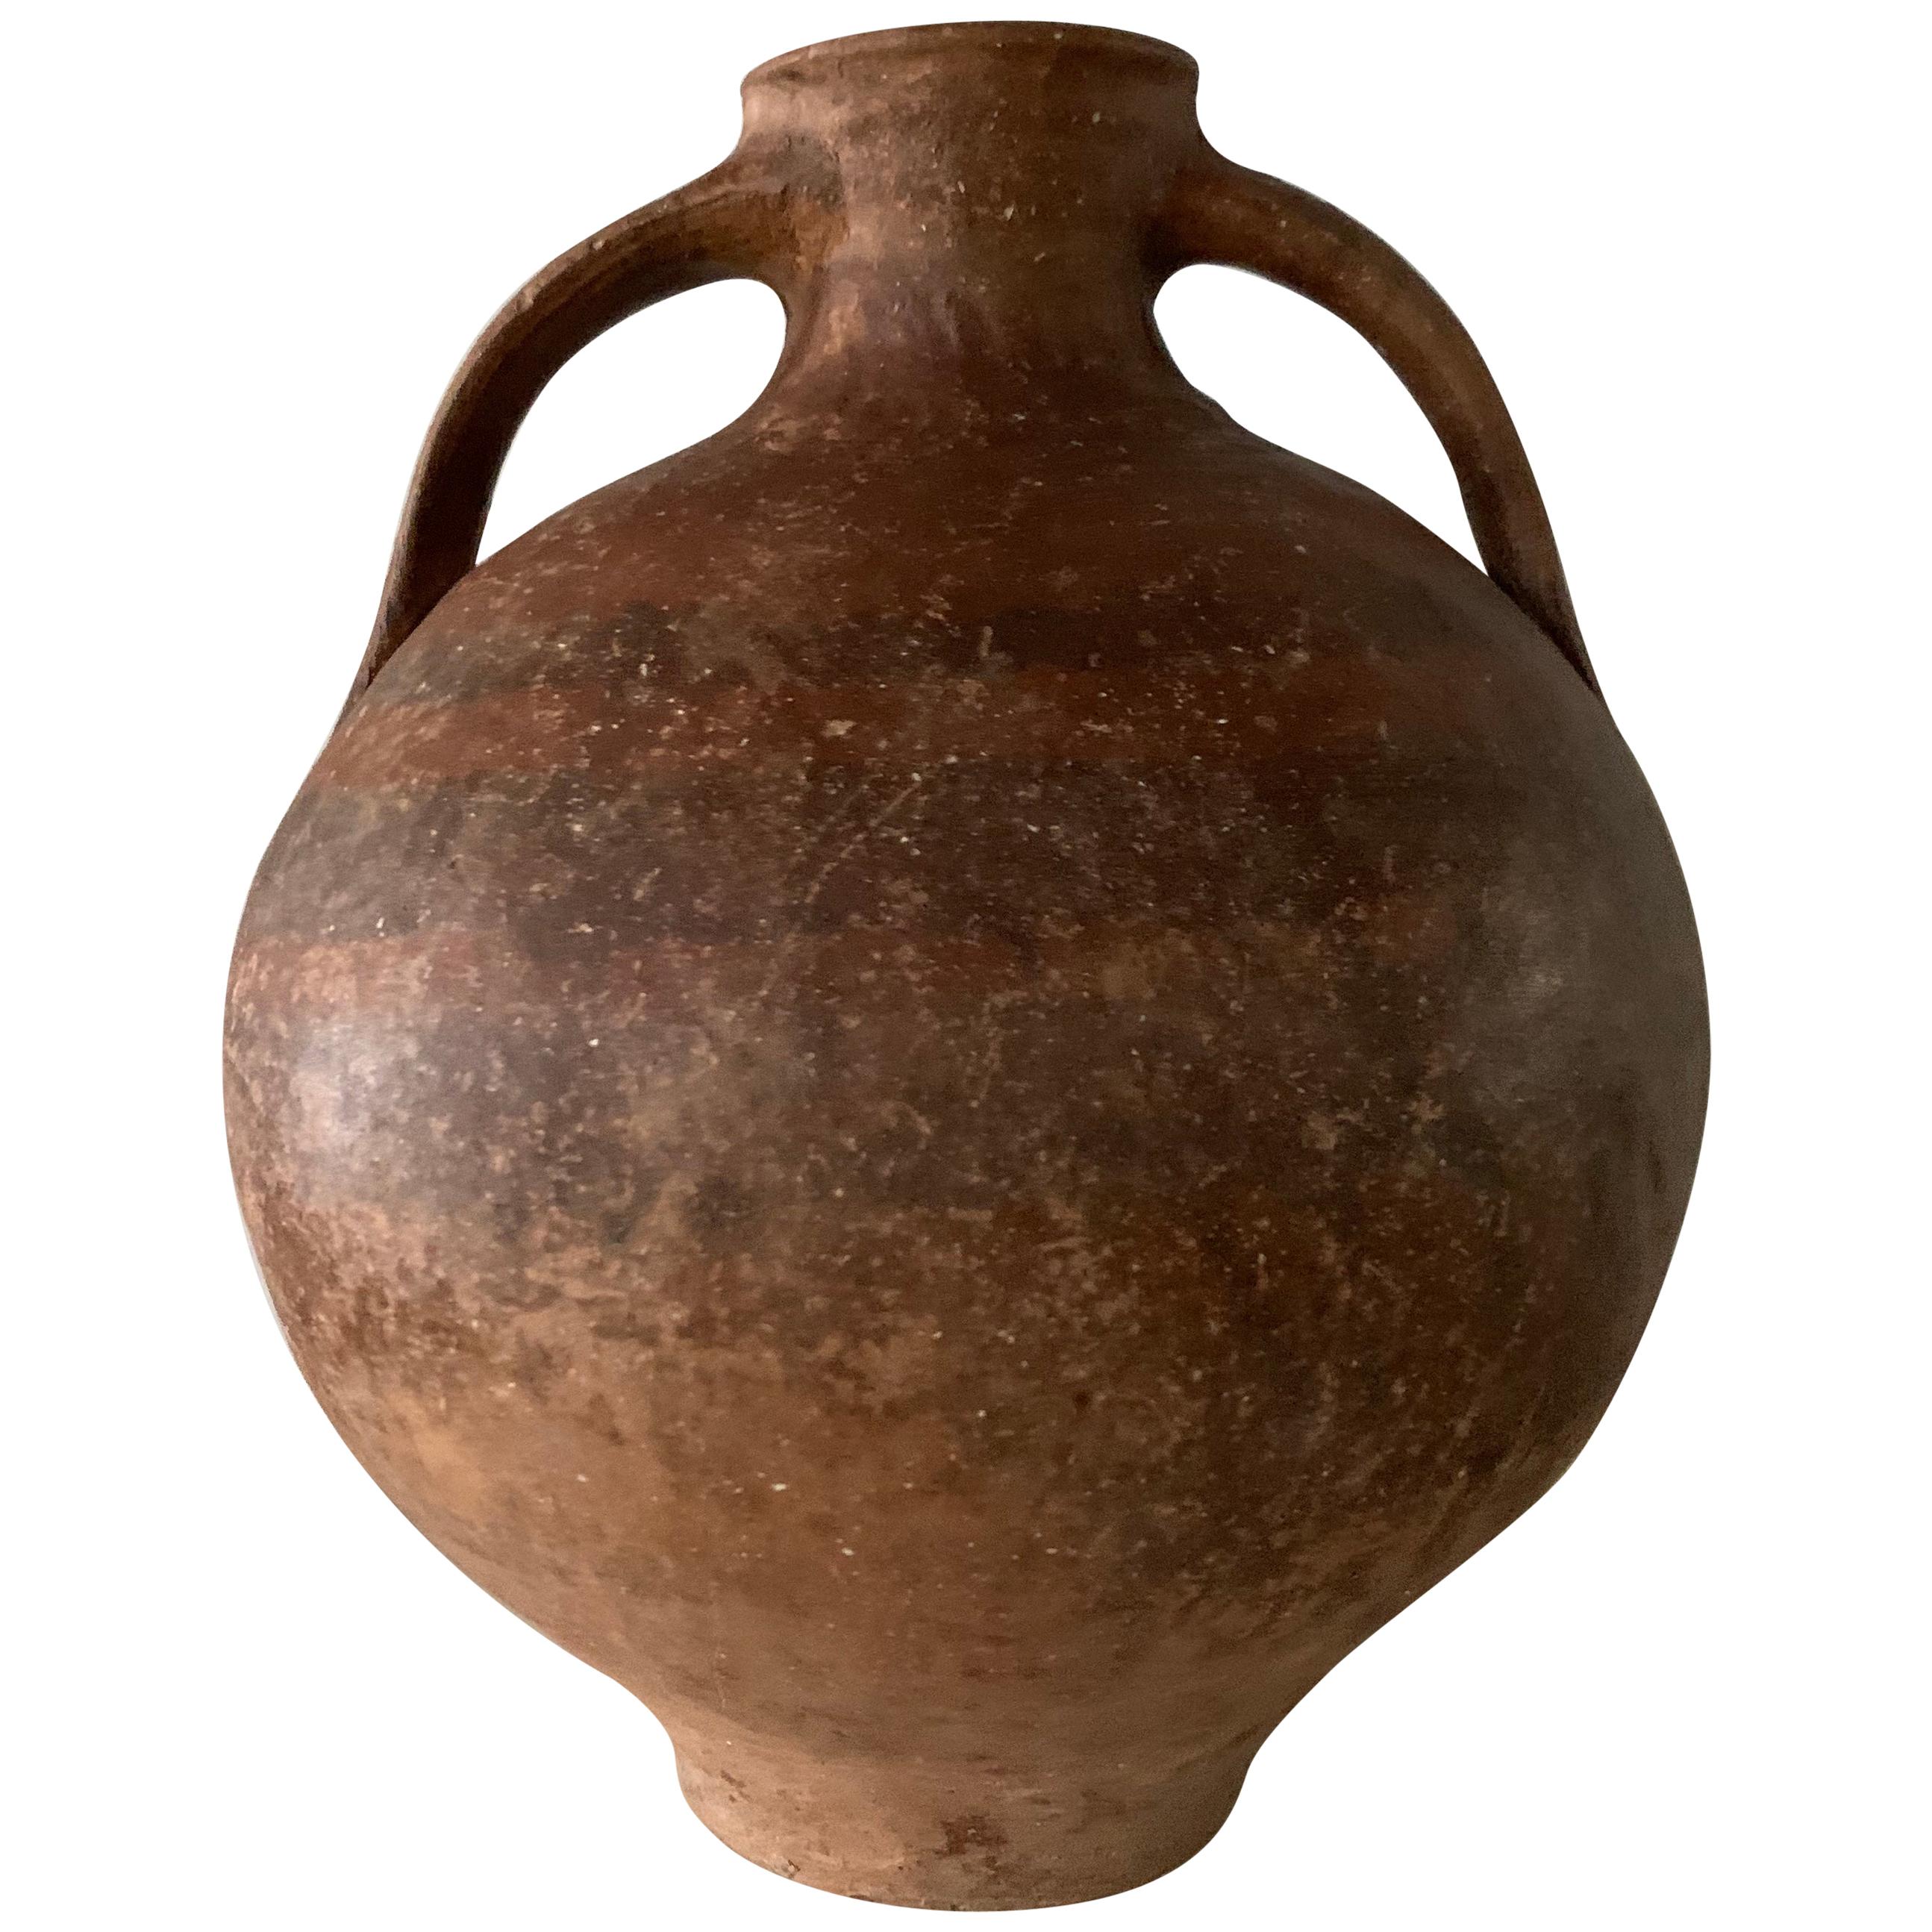 18th Century Picher "Cantaro" from Calanda, Spain, Terracotta Vase